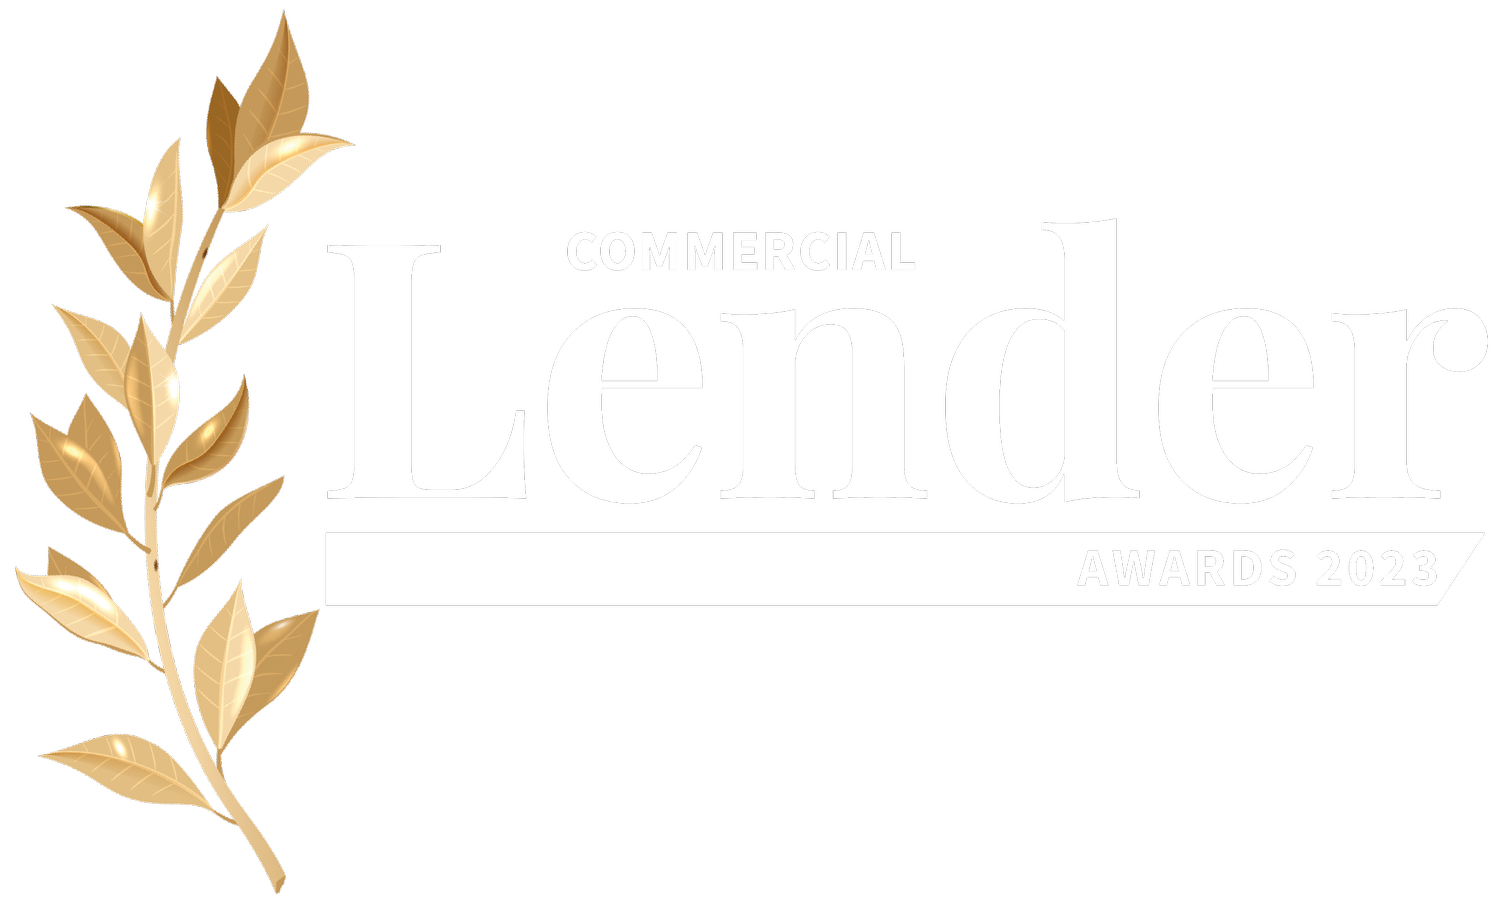 NACFB Commercial Lender Awards 2023